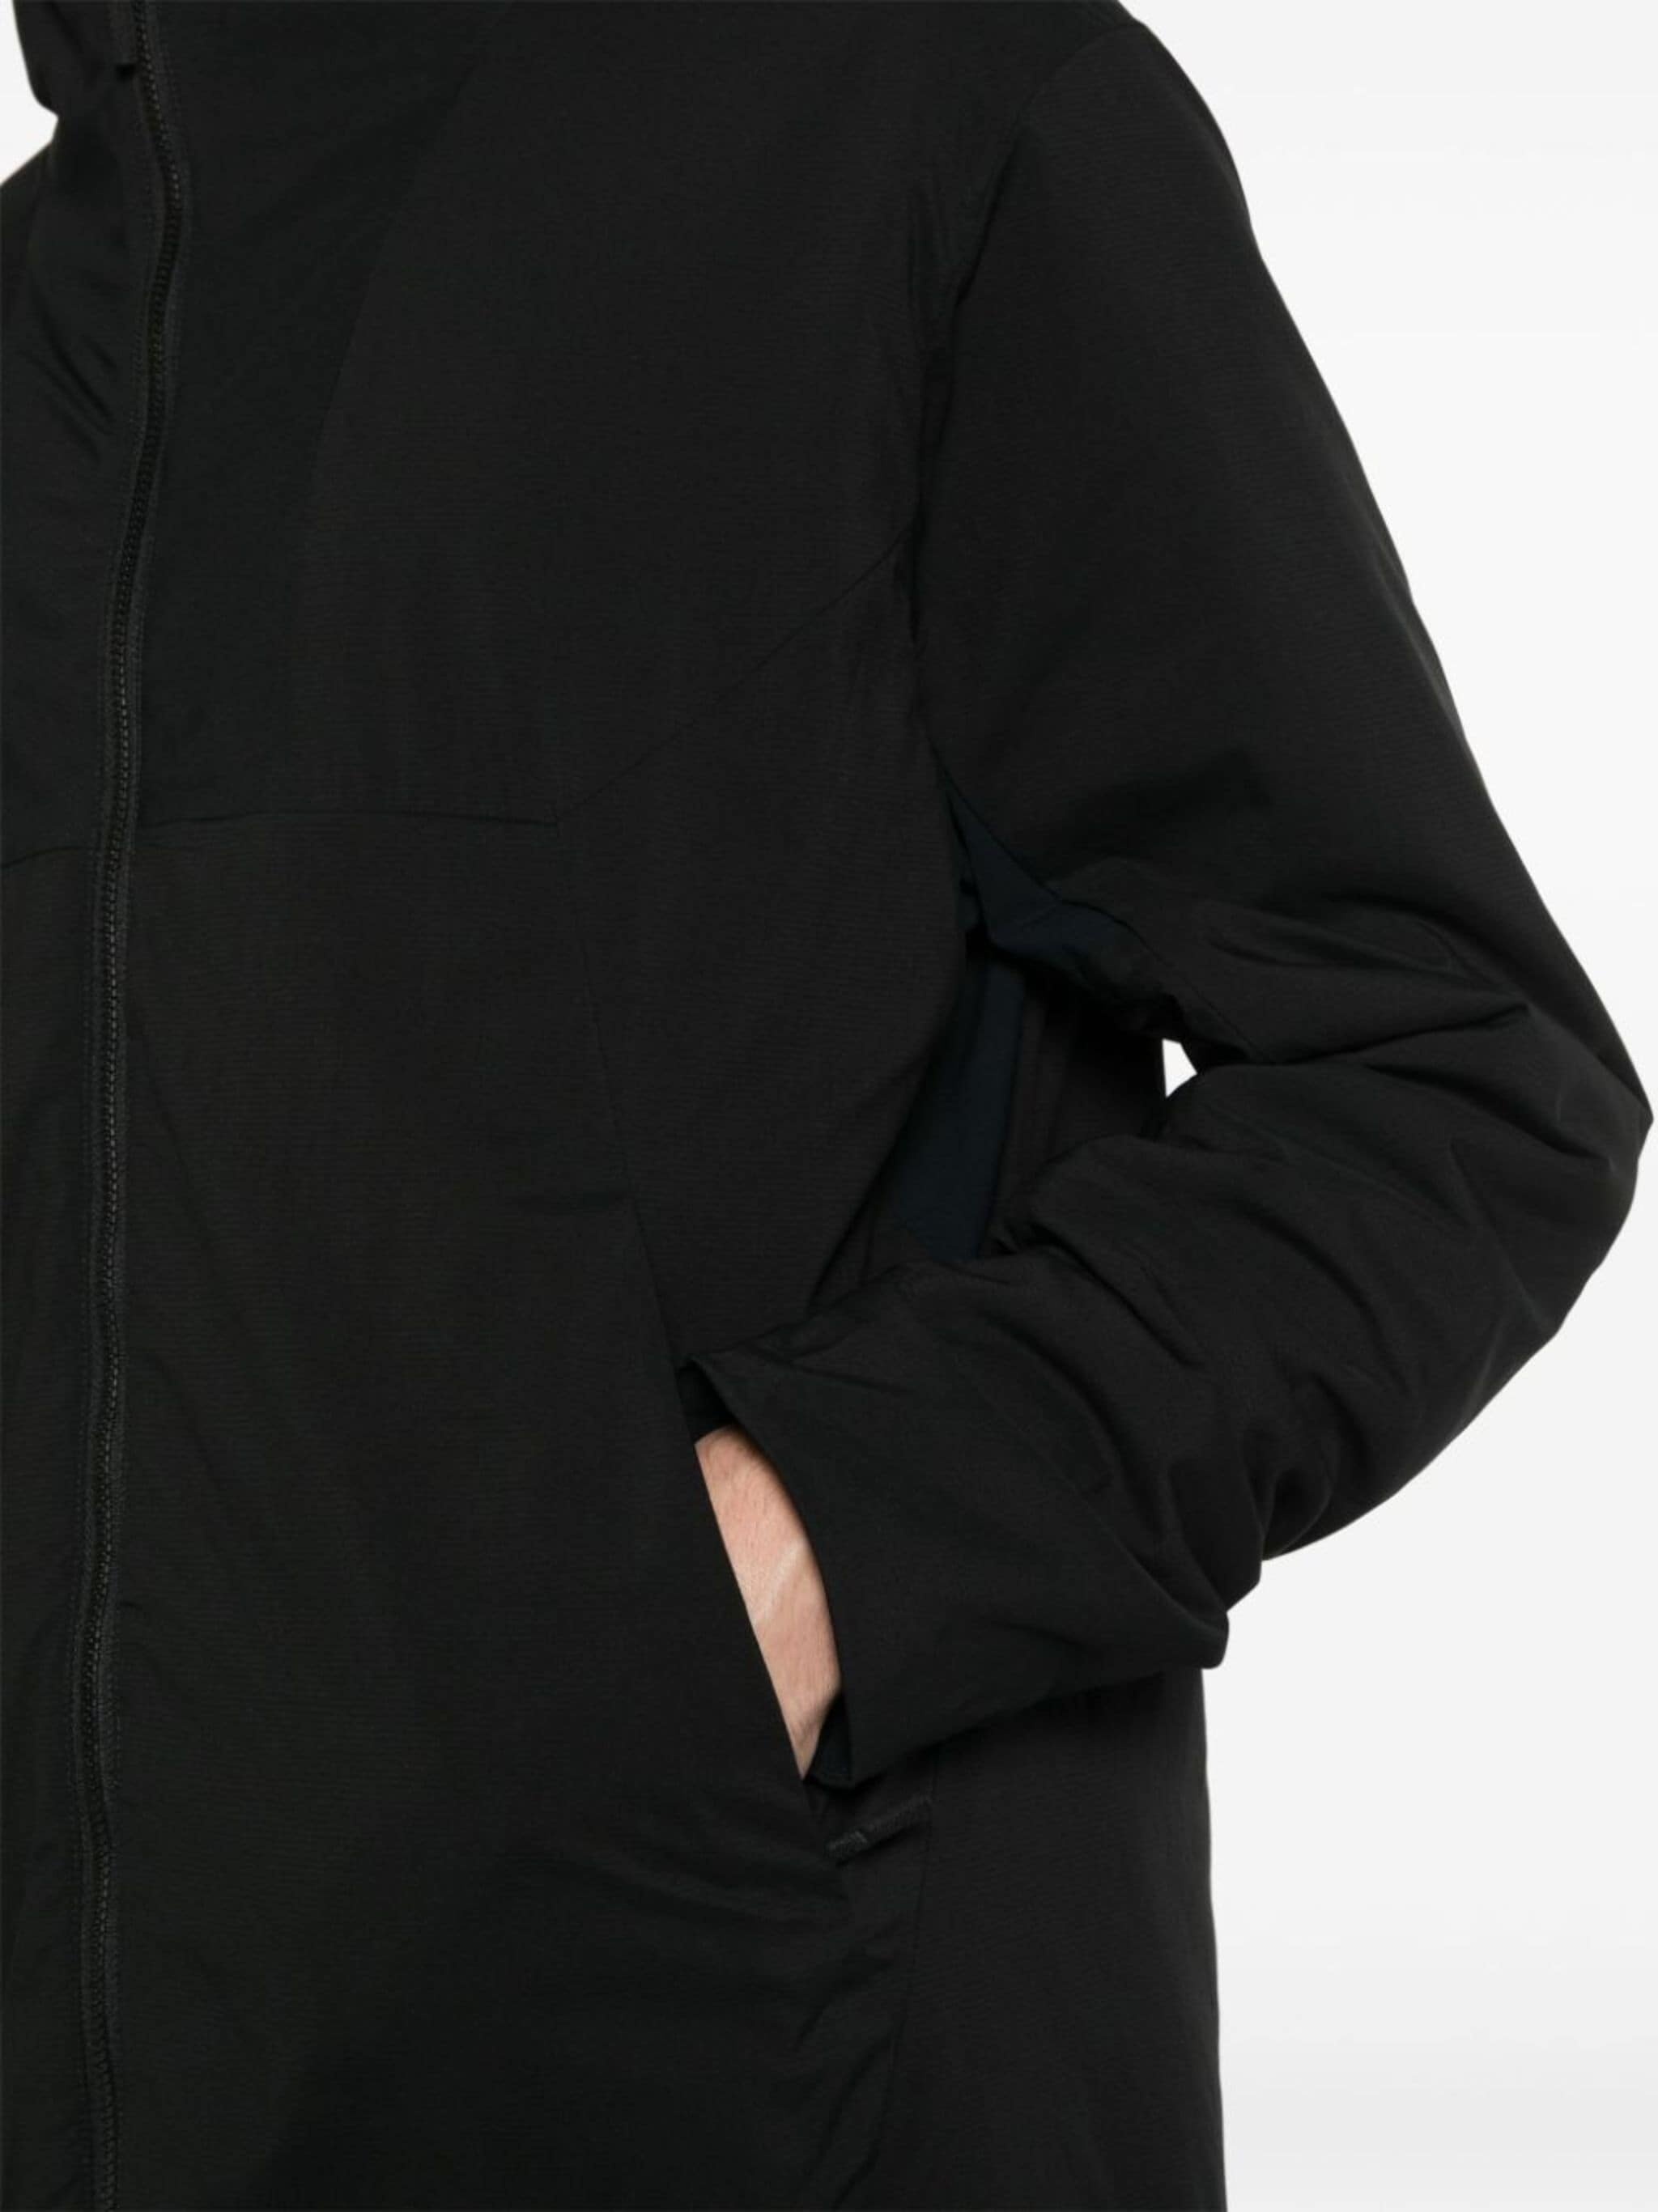 Mioon lightweight jacket - 5